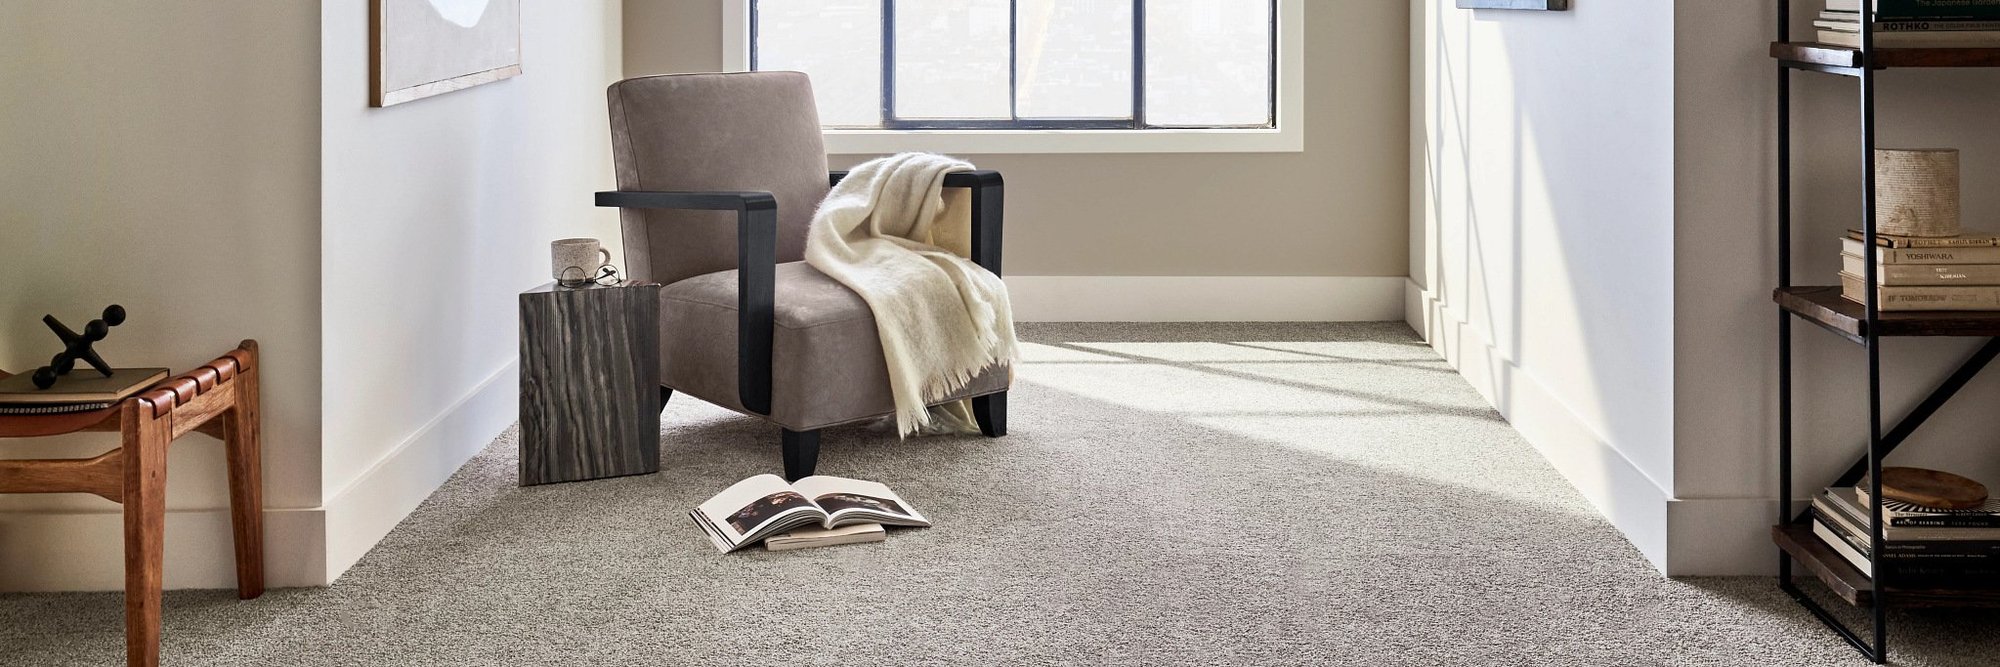 Living room carpet - Dream Home Interiors in Colorado Springs, CO